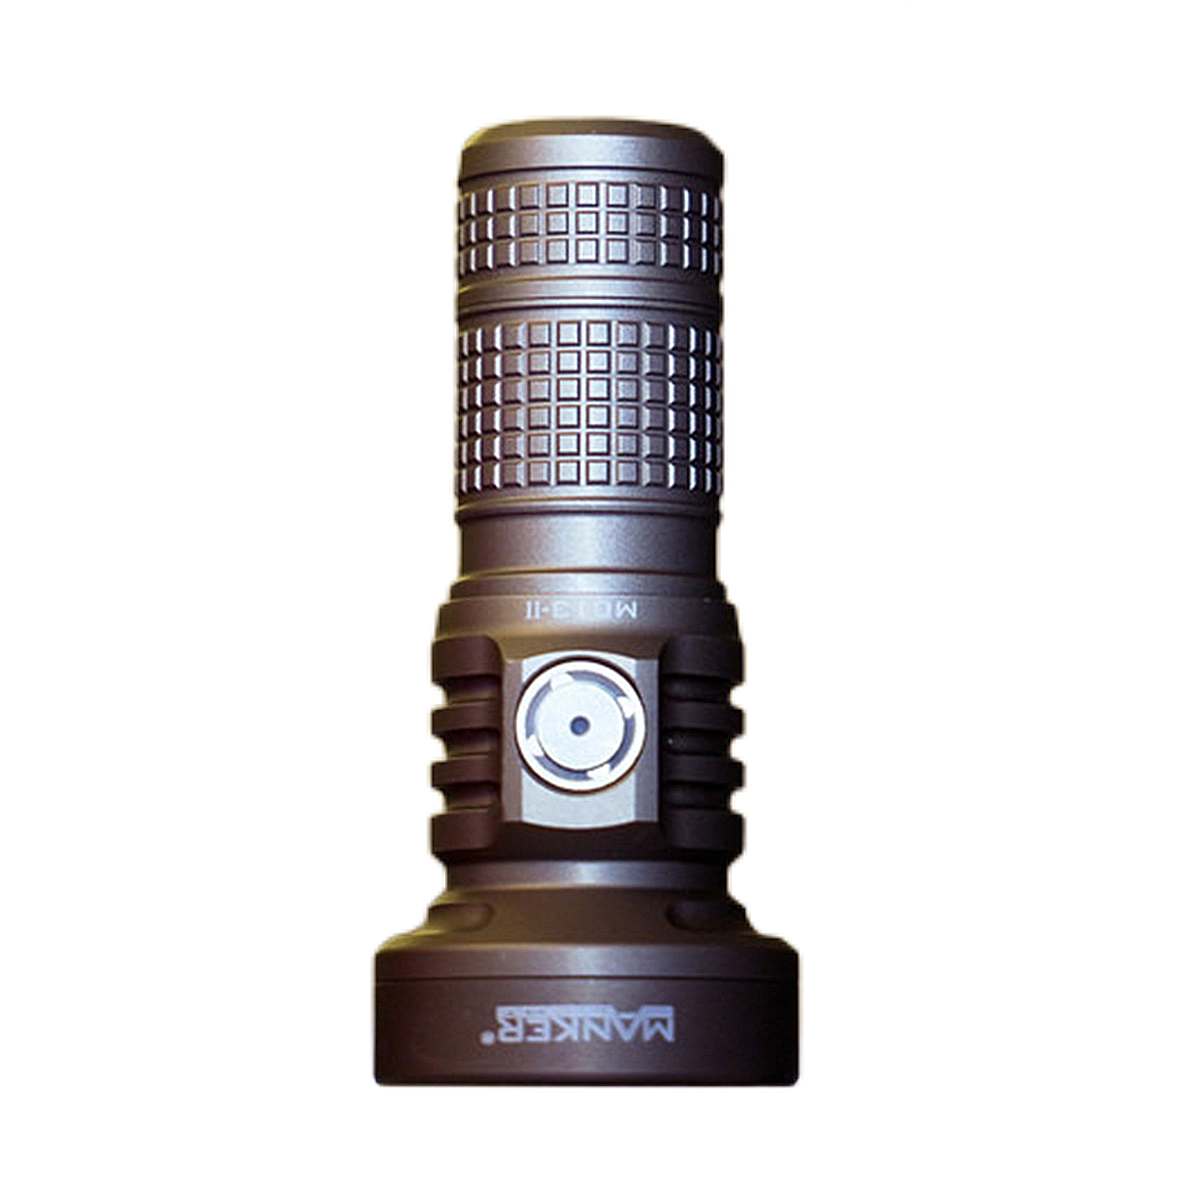 Mankerlight MC13 II SBT90 GEN2 LED Edc Flashlight Dual Use 18650 and 18350 Battery PVD Sand